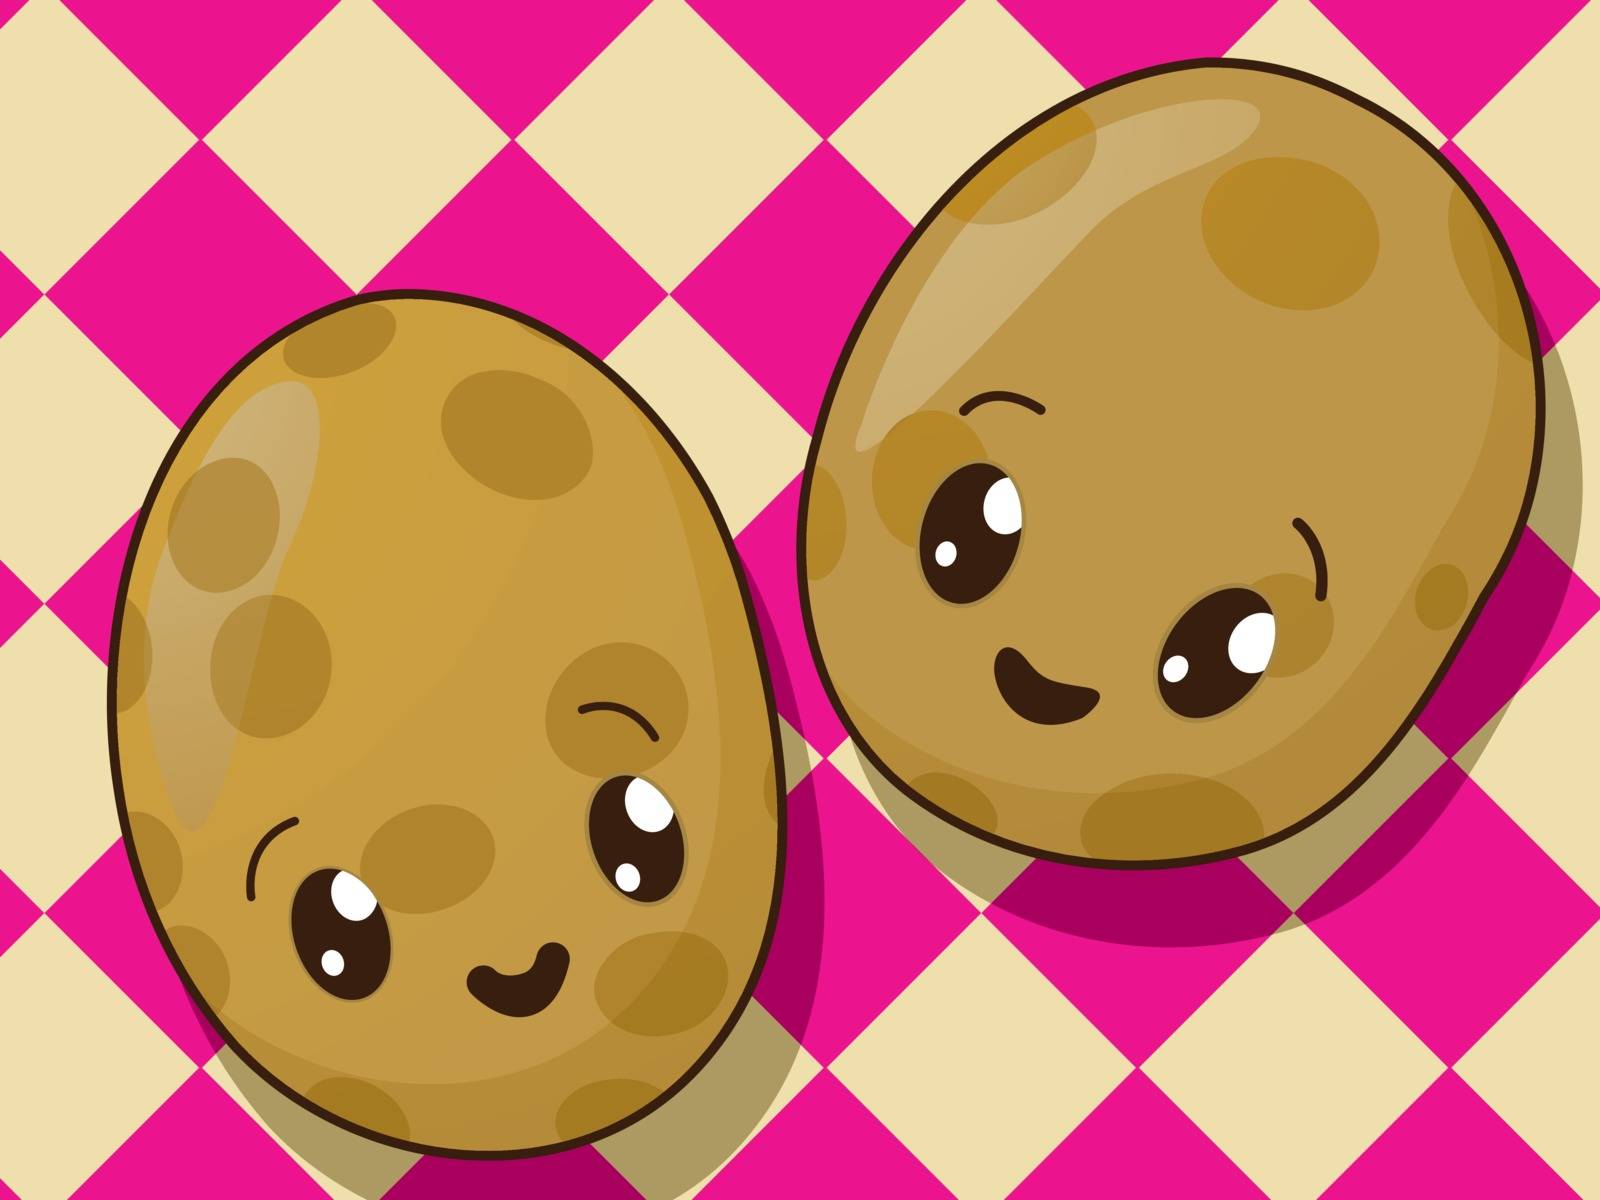 Kawaii potato icons by Lirch